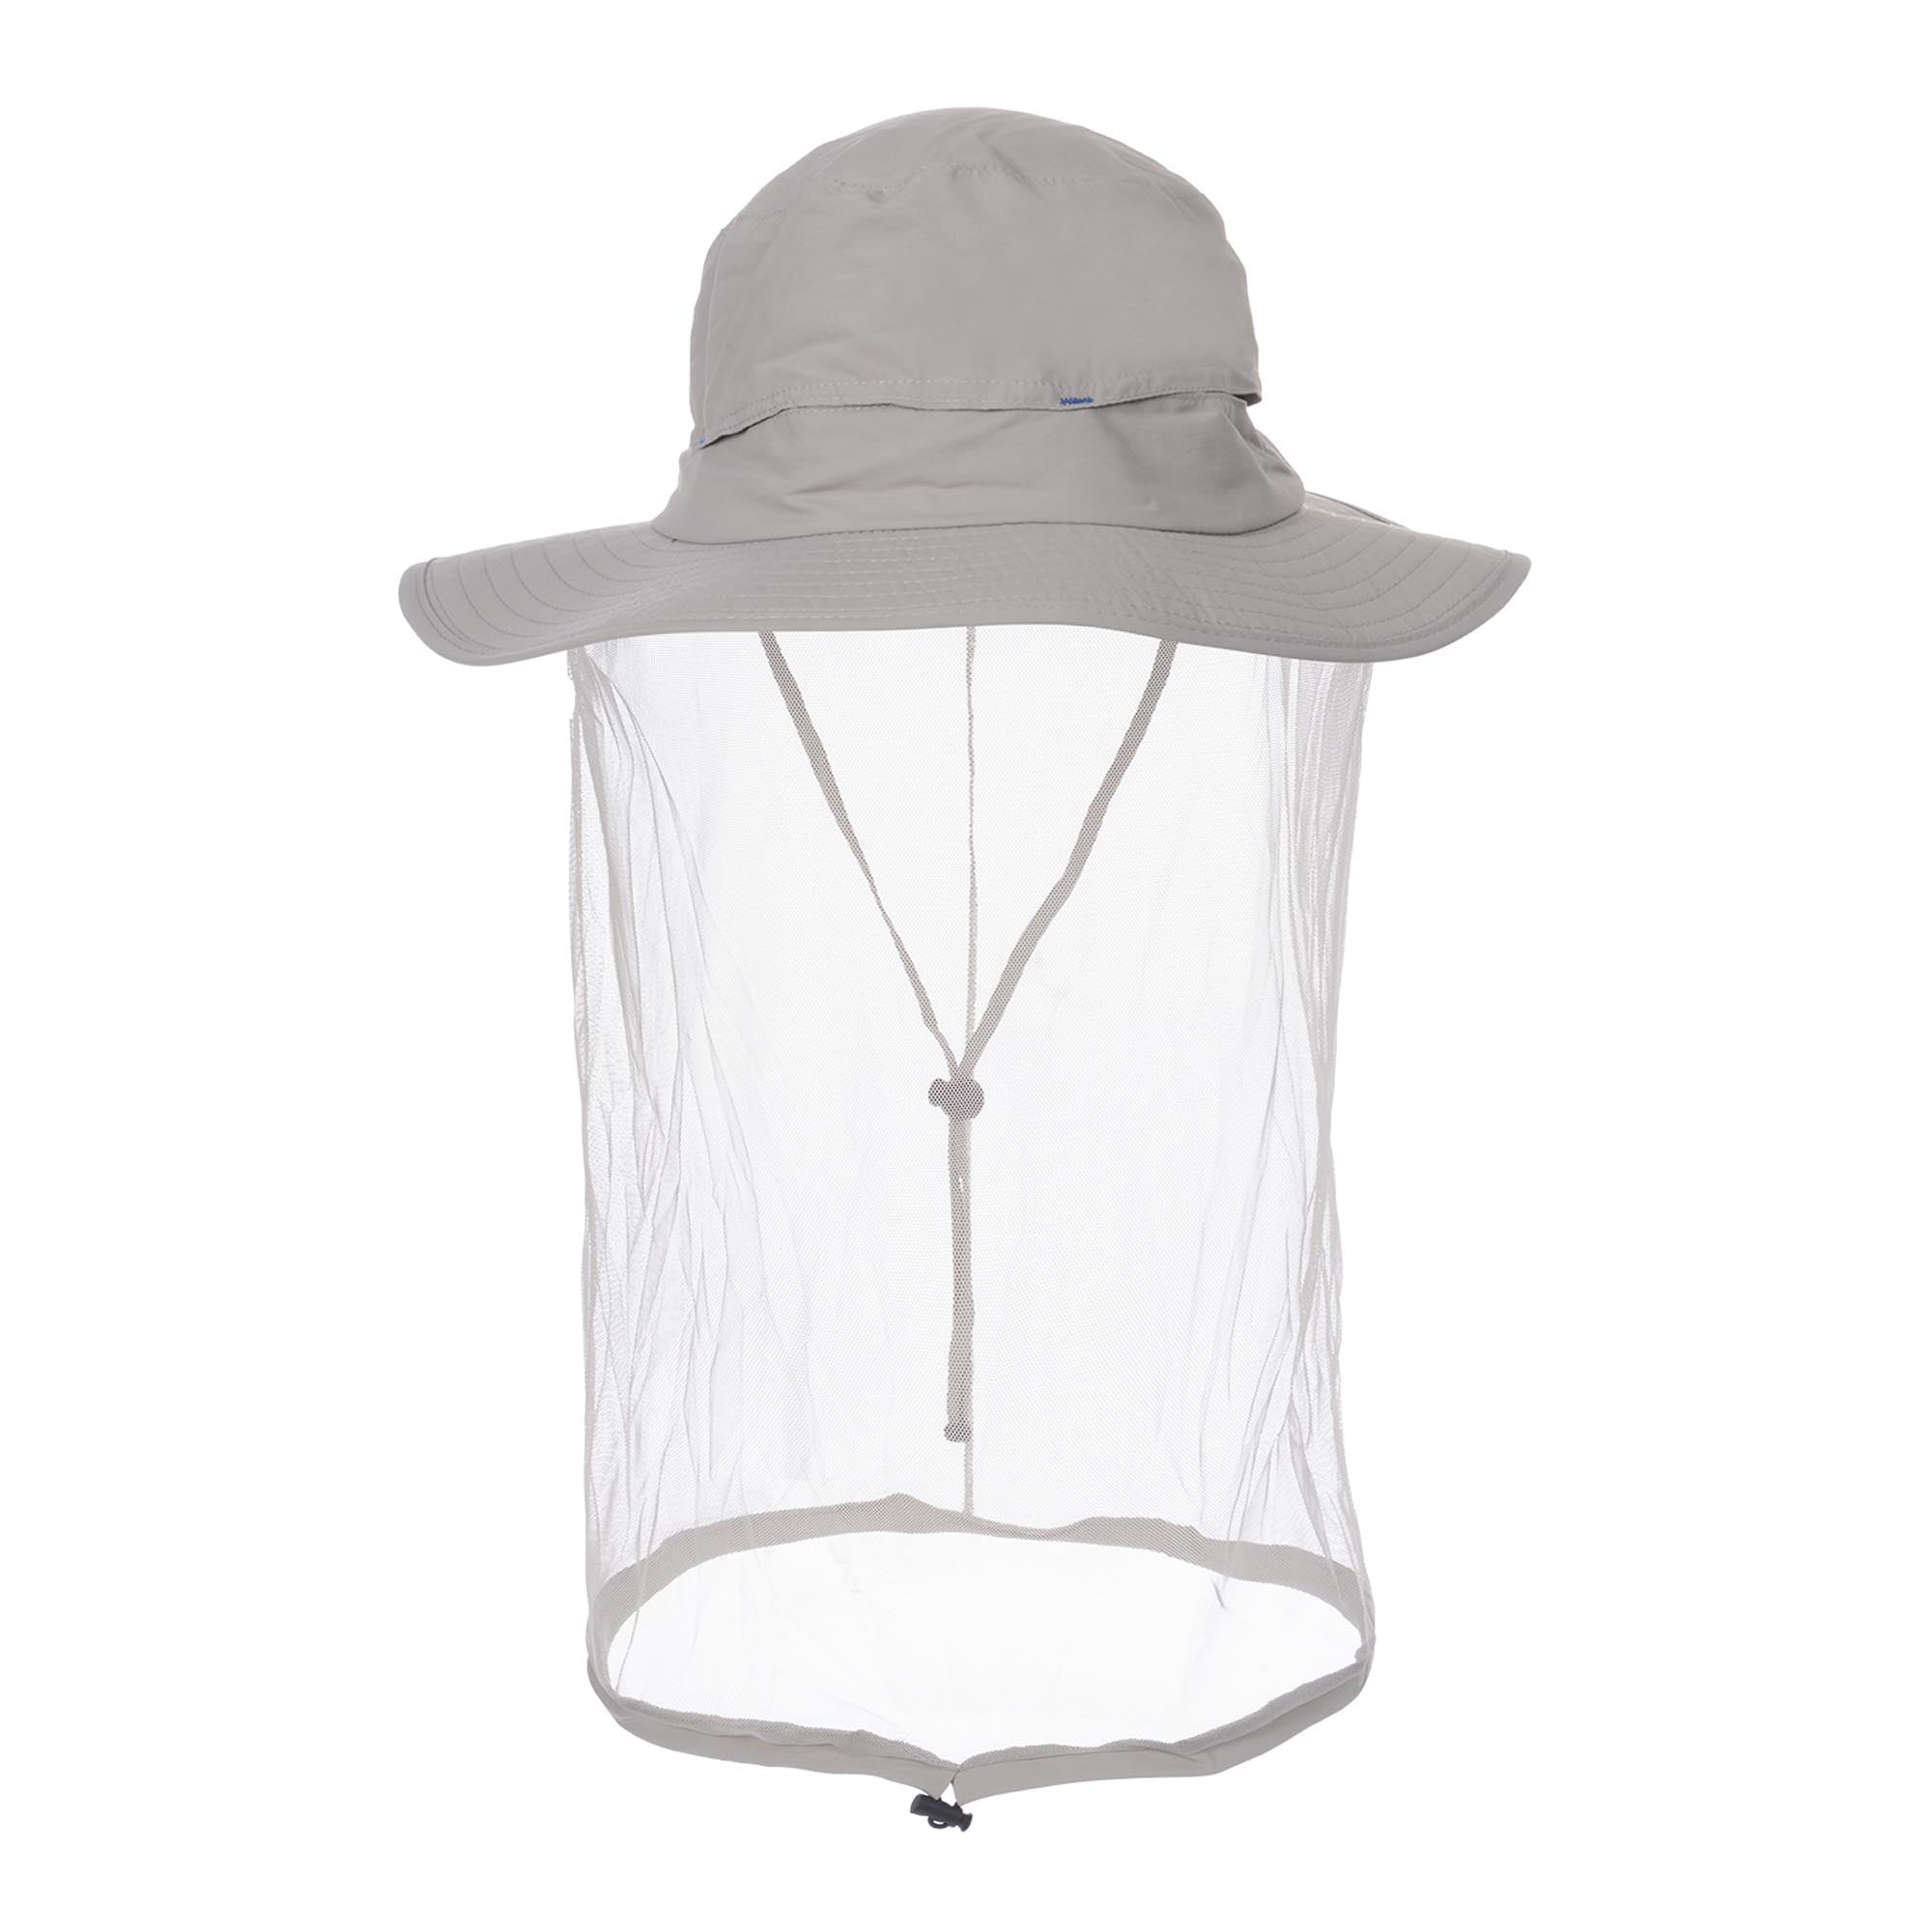 Mosquito Head Net Sun Hat Bug Bee Protection Mesh Comoros